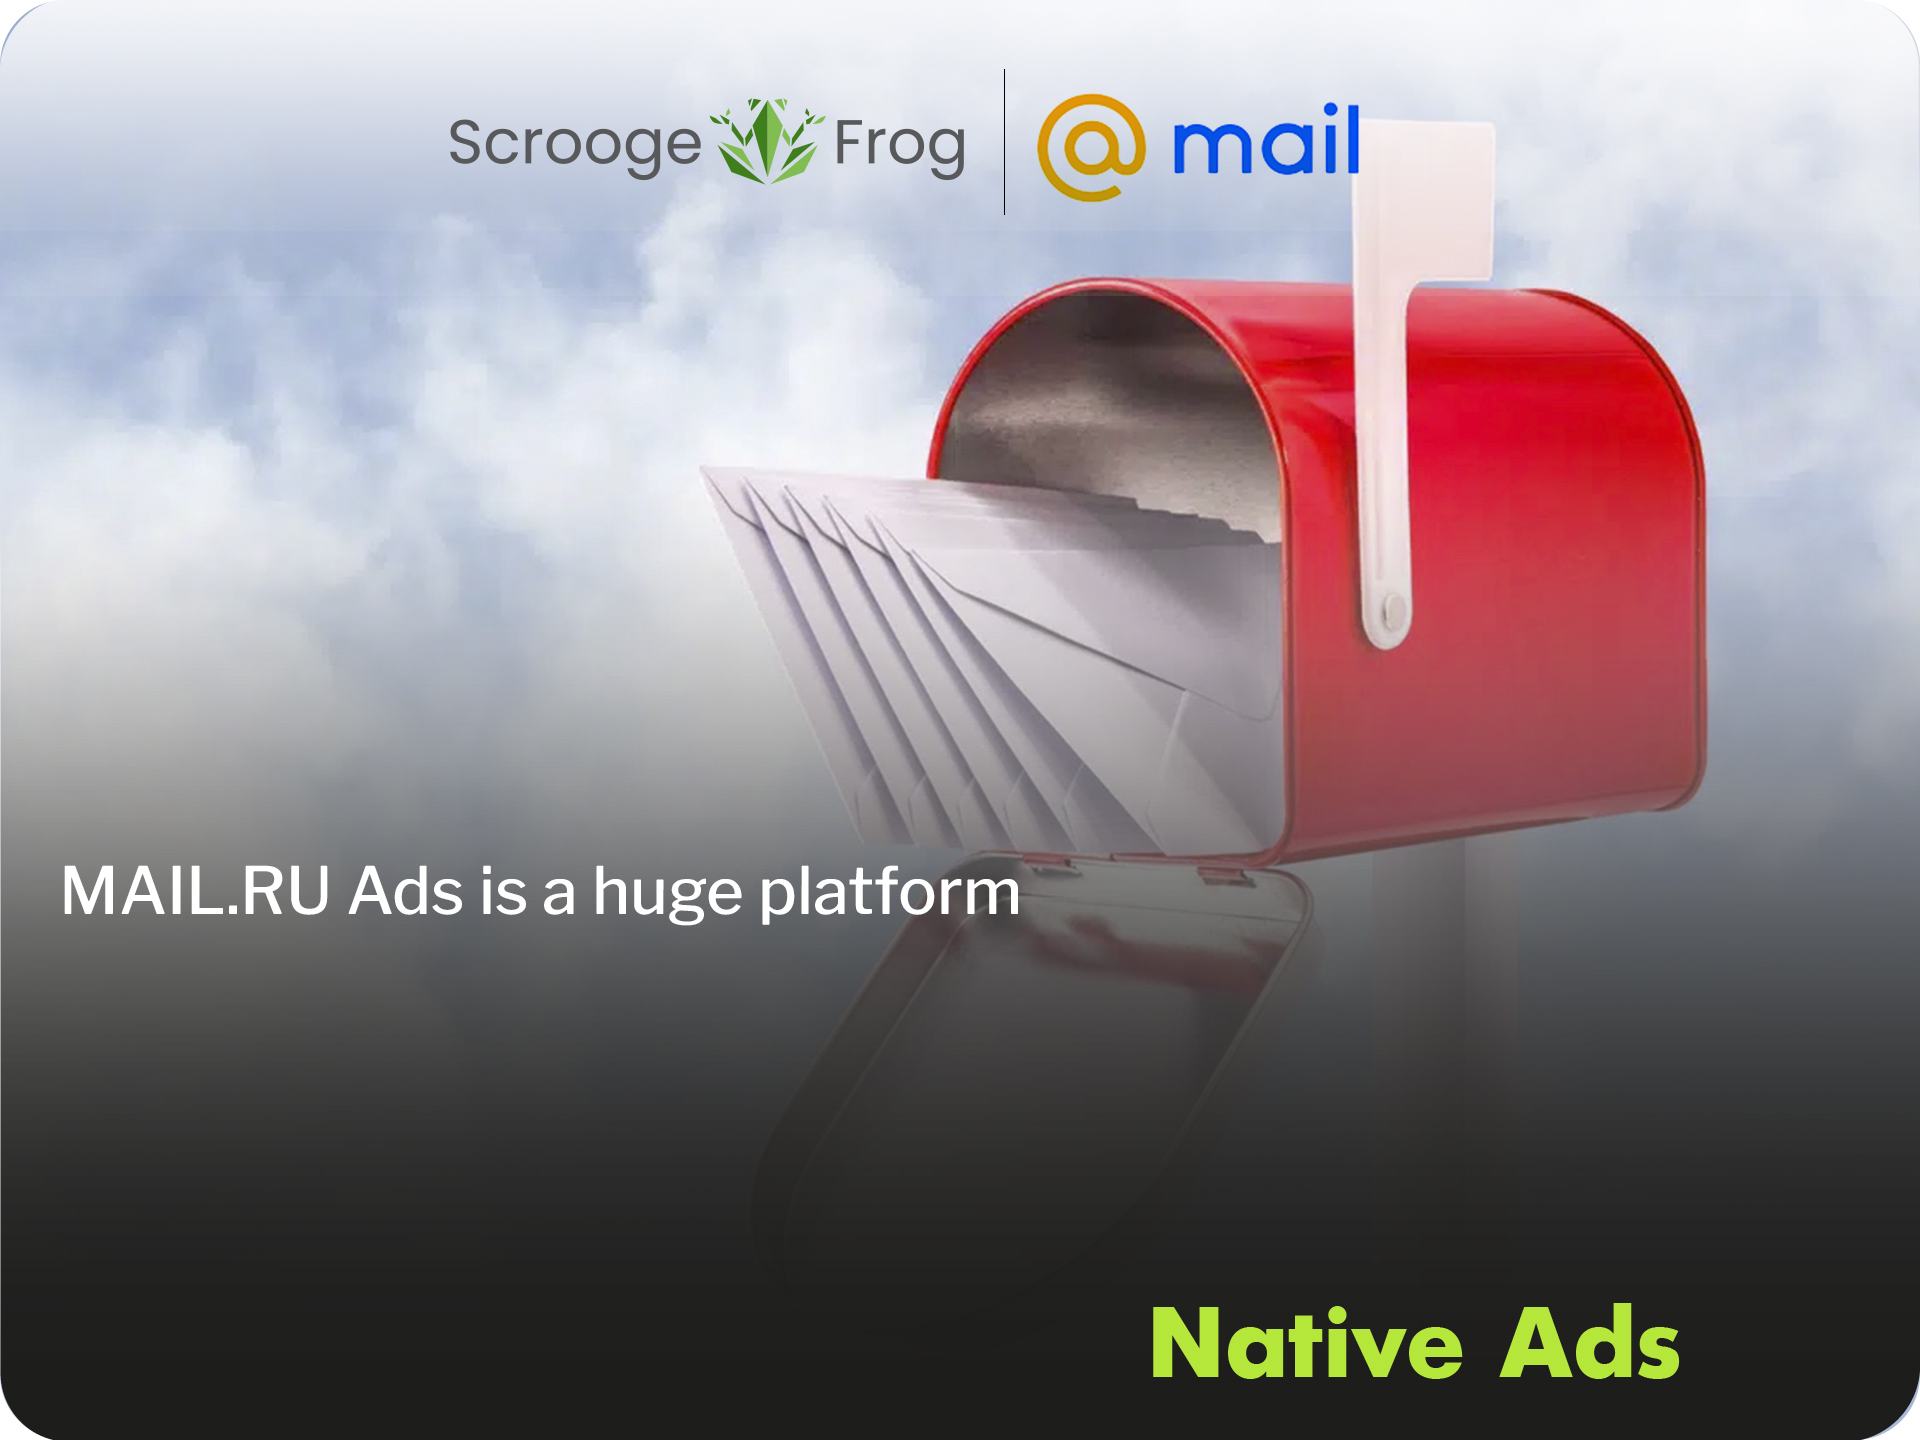 MAIL.RU Ads is a huge platform